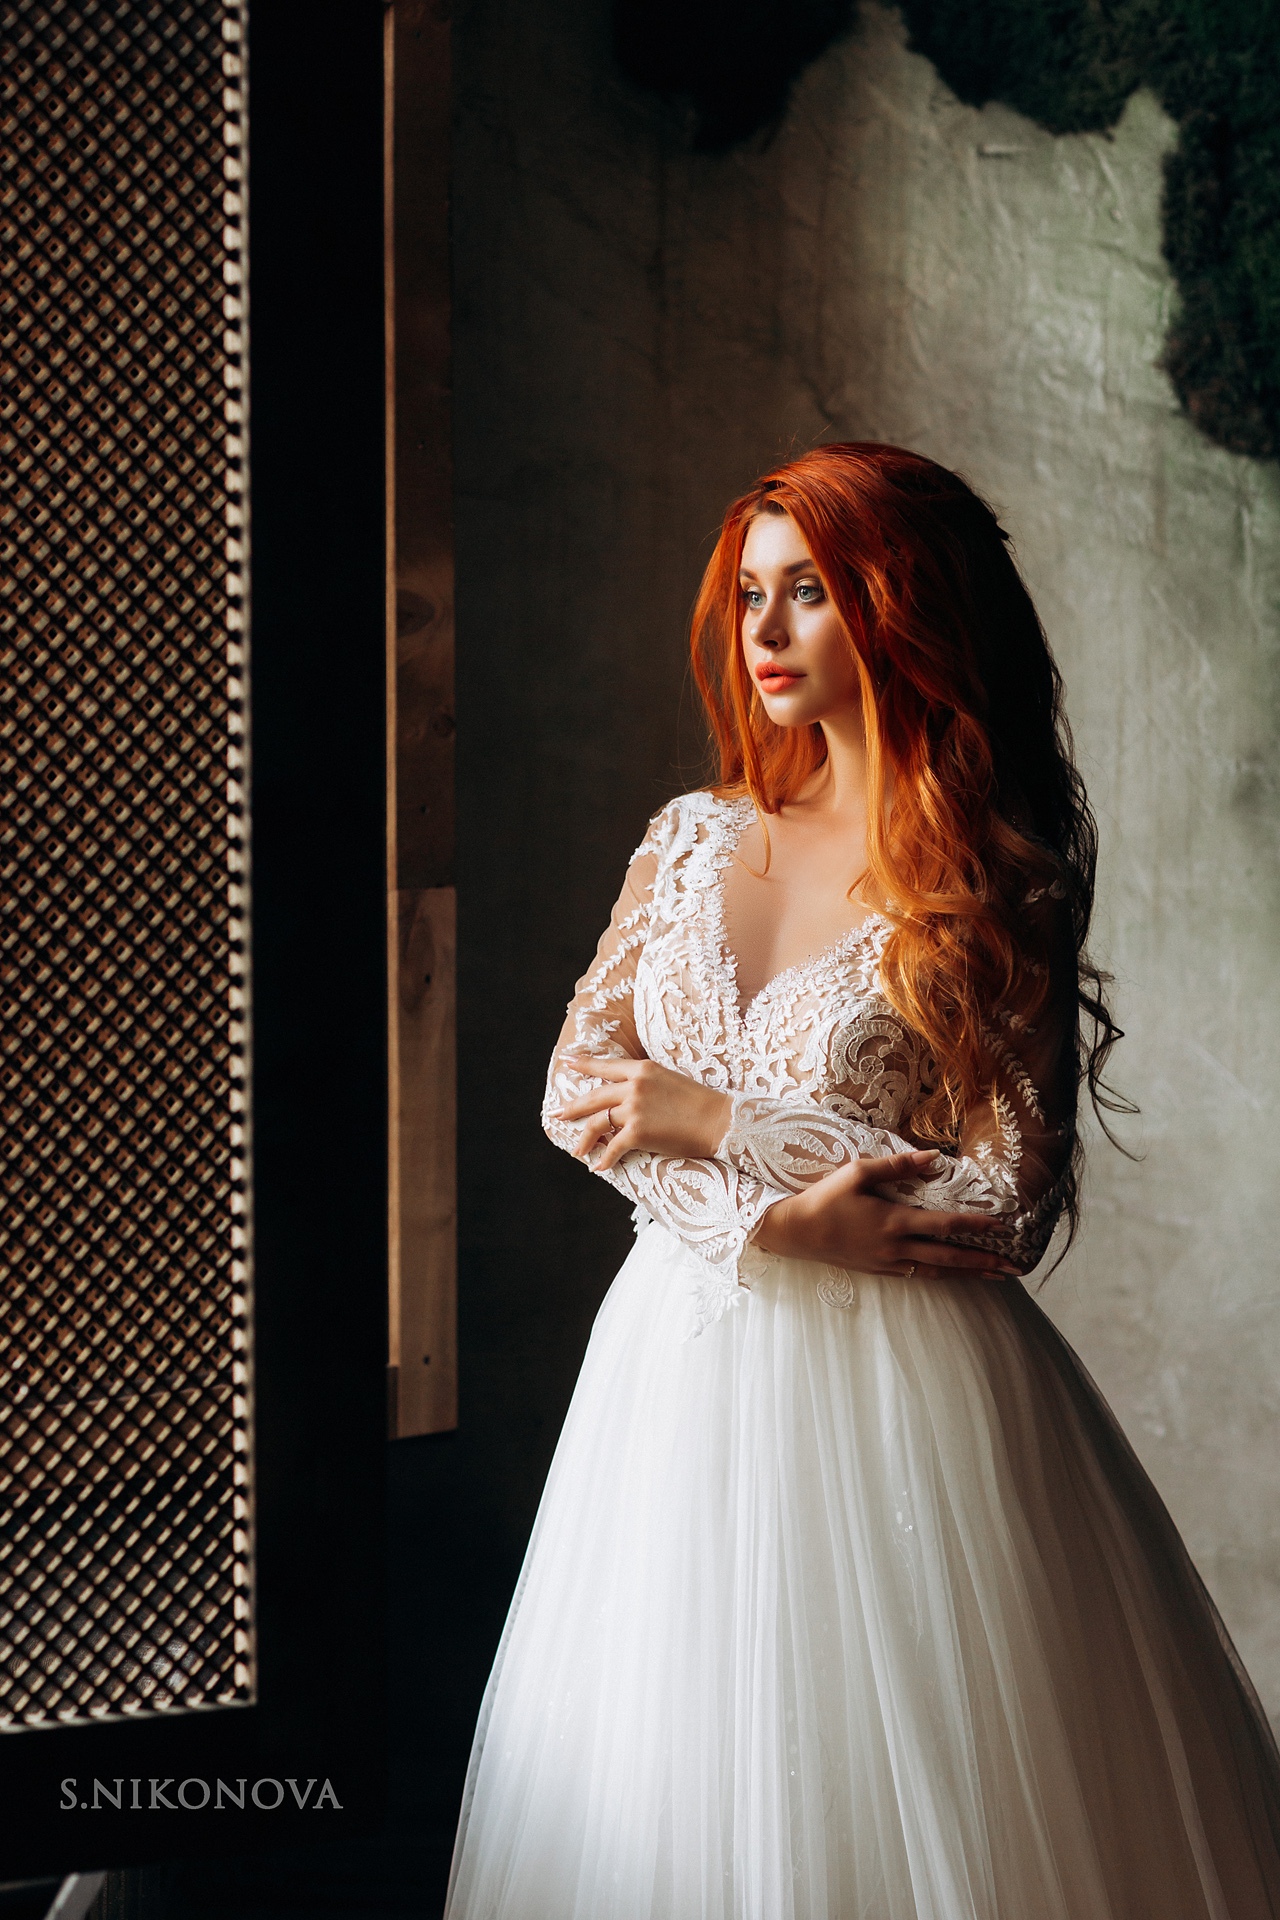 Dana Bounty Women Model Redhead Portrait Wedding Dress White Dress Indoors Looking Away Arms Crossed 1280x1920